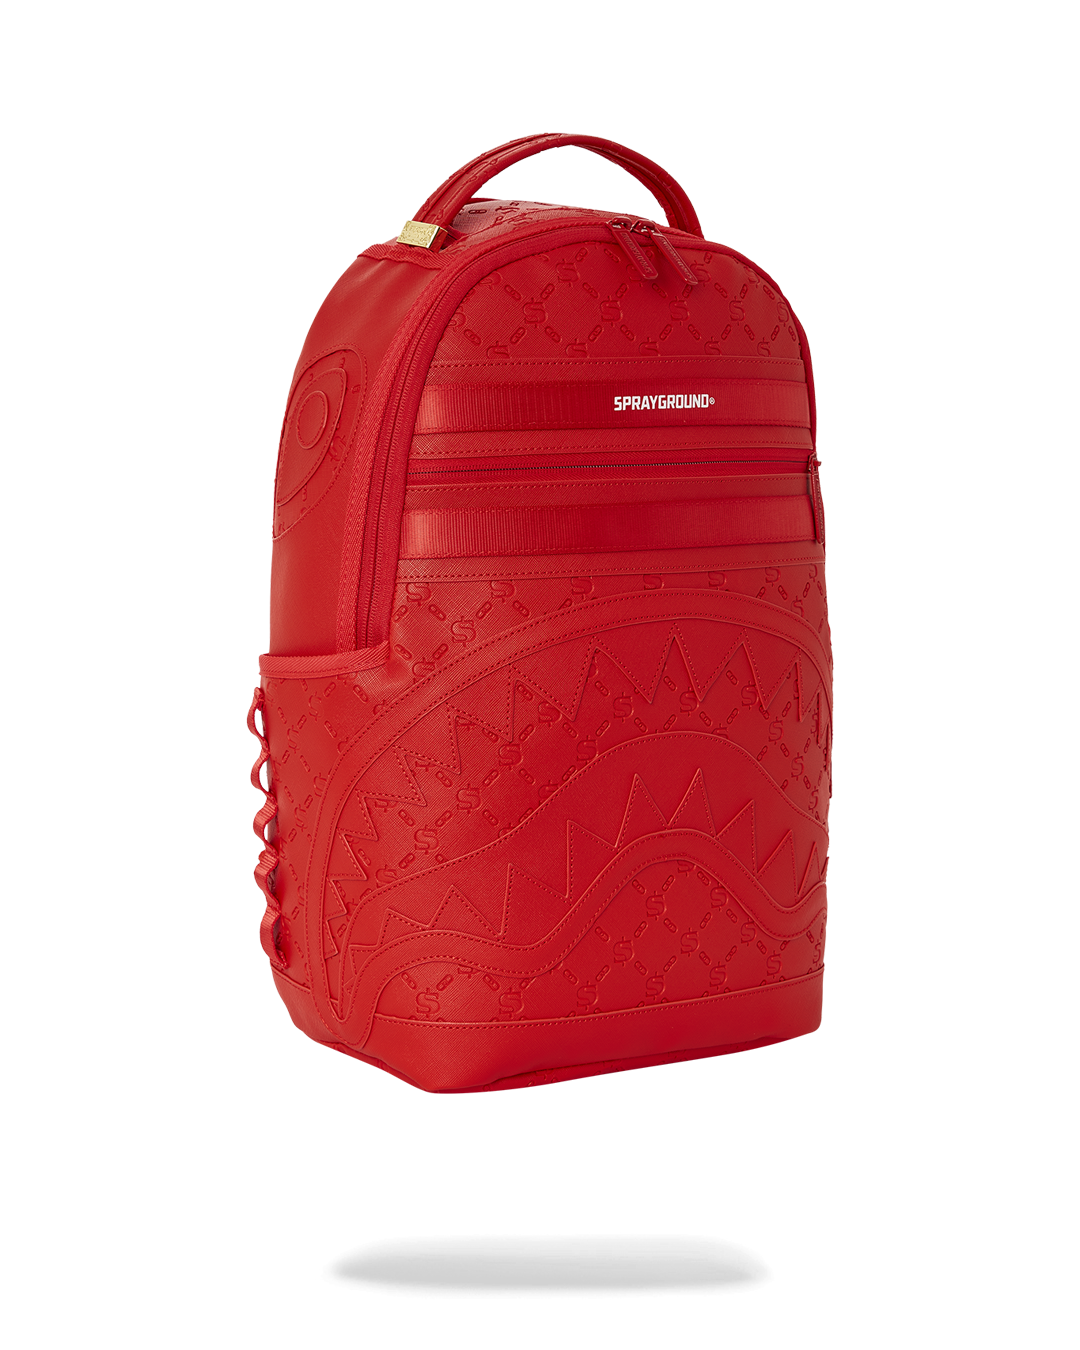 Sprayground Deniro Duffel Bag in Red for Men